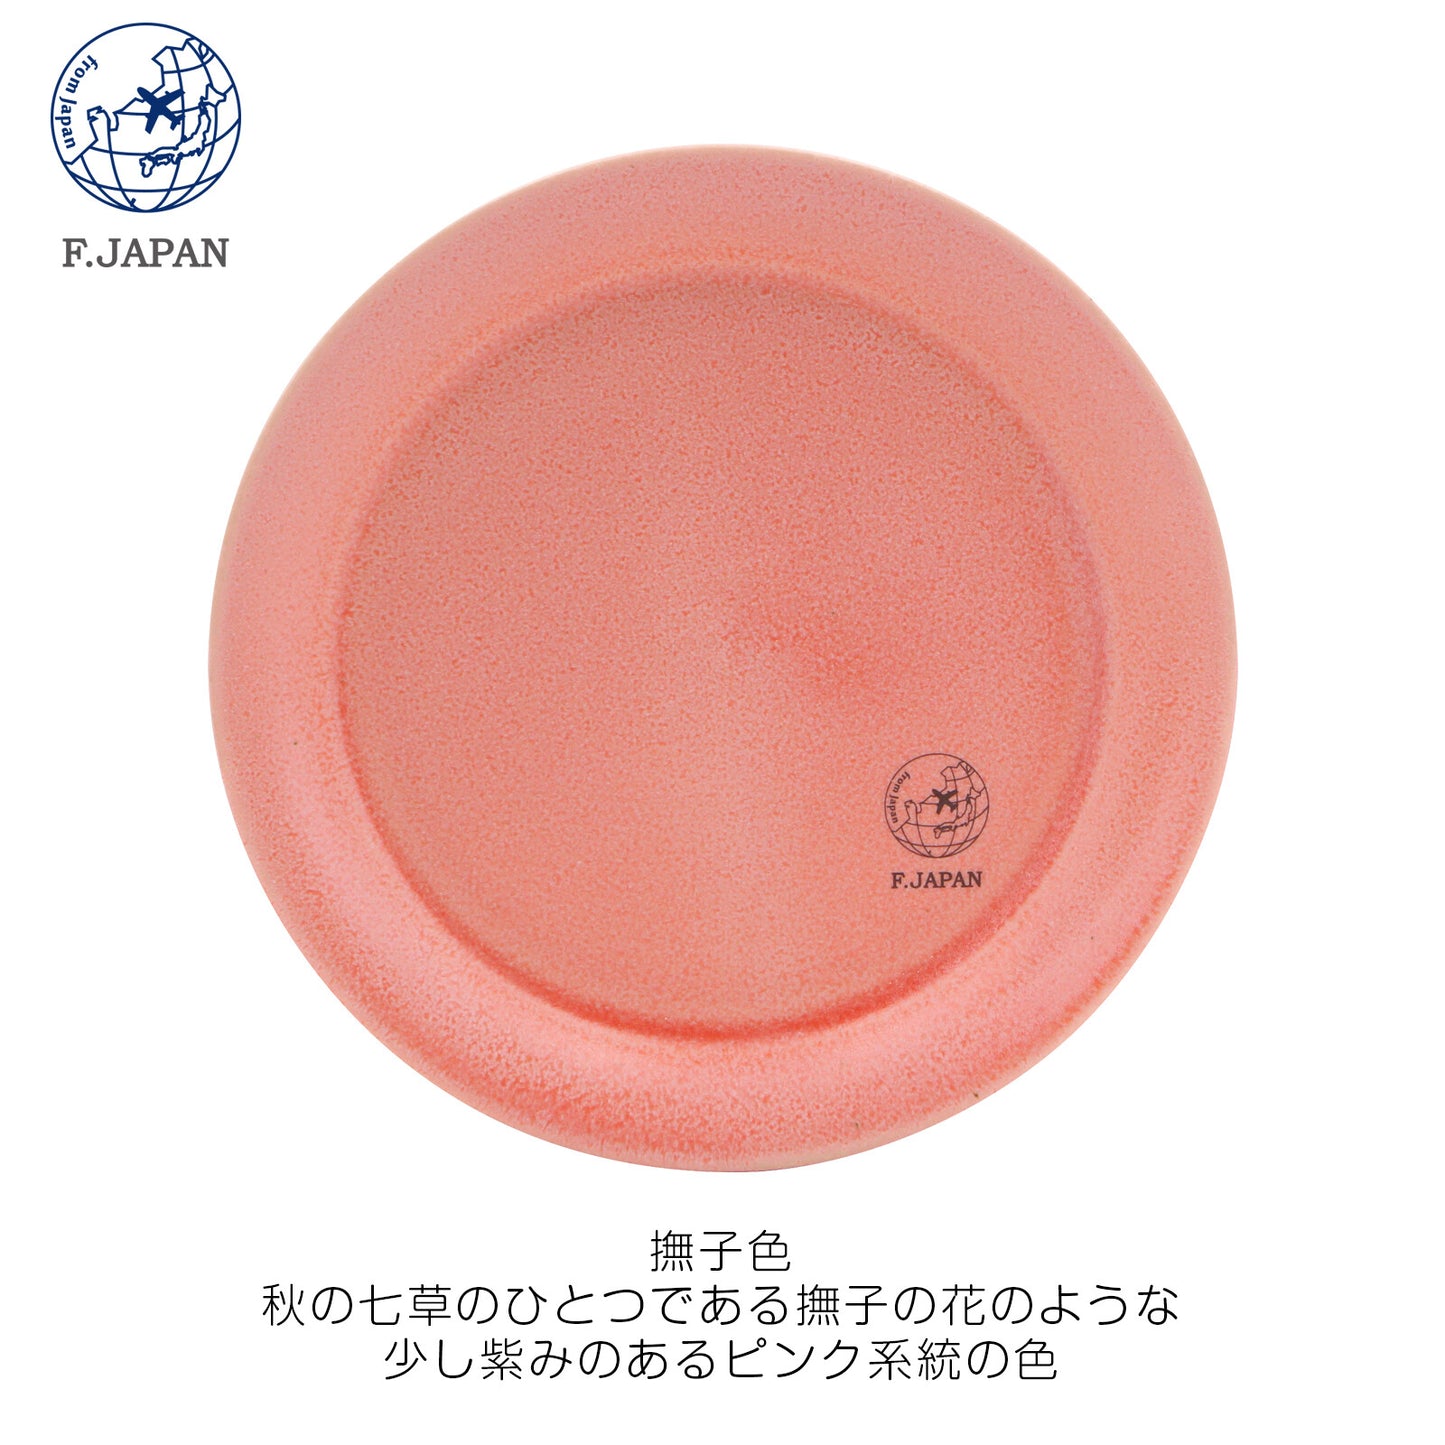 F.JAPAN Mino Yaki and Color Ceramic Plate